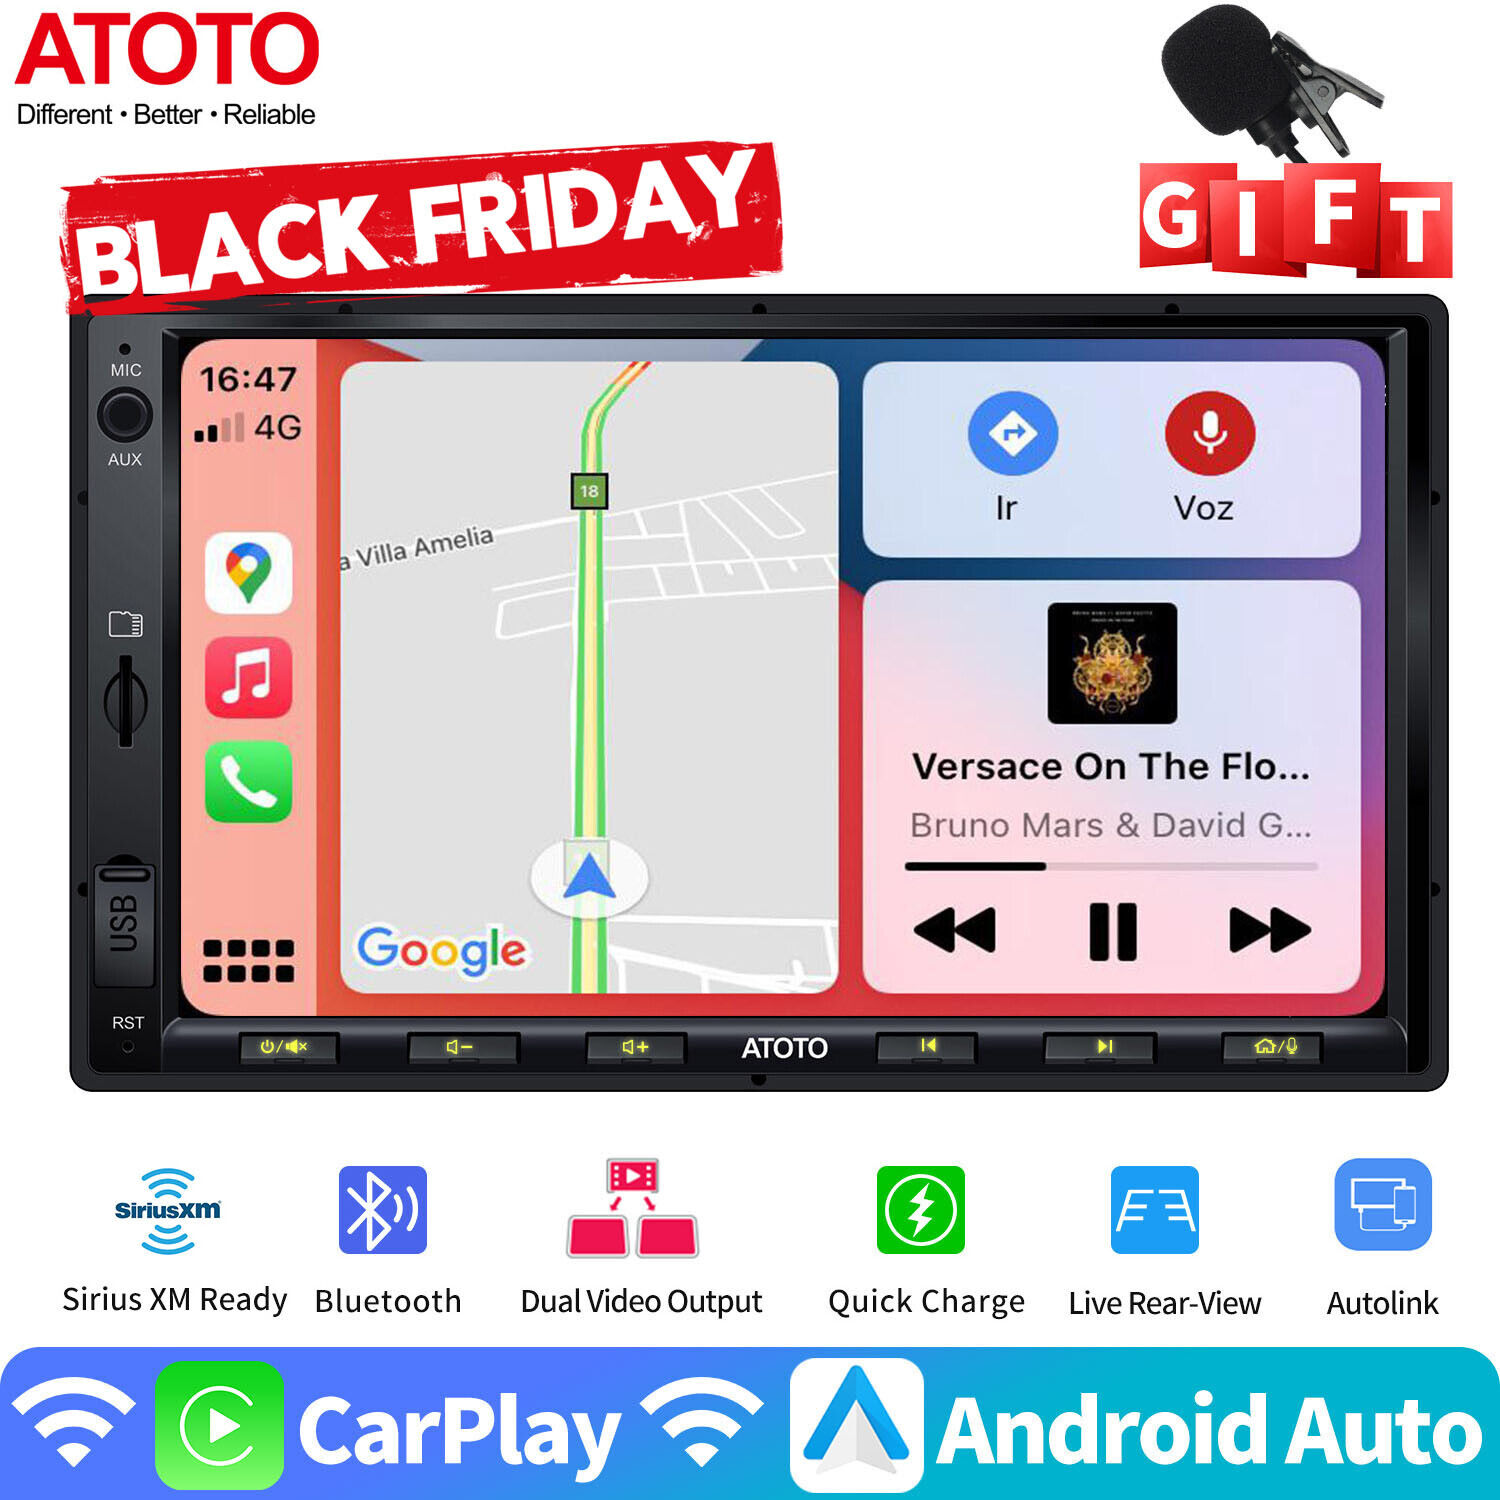 ATOTO F7XE 7in Double 2DIN Car Stereo SXM Radio Wireless Android Auto & CarPlay